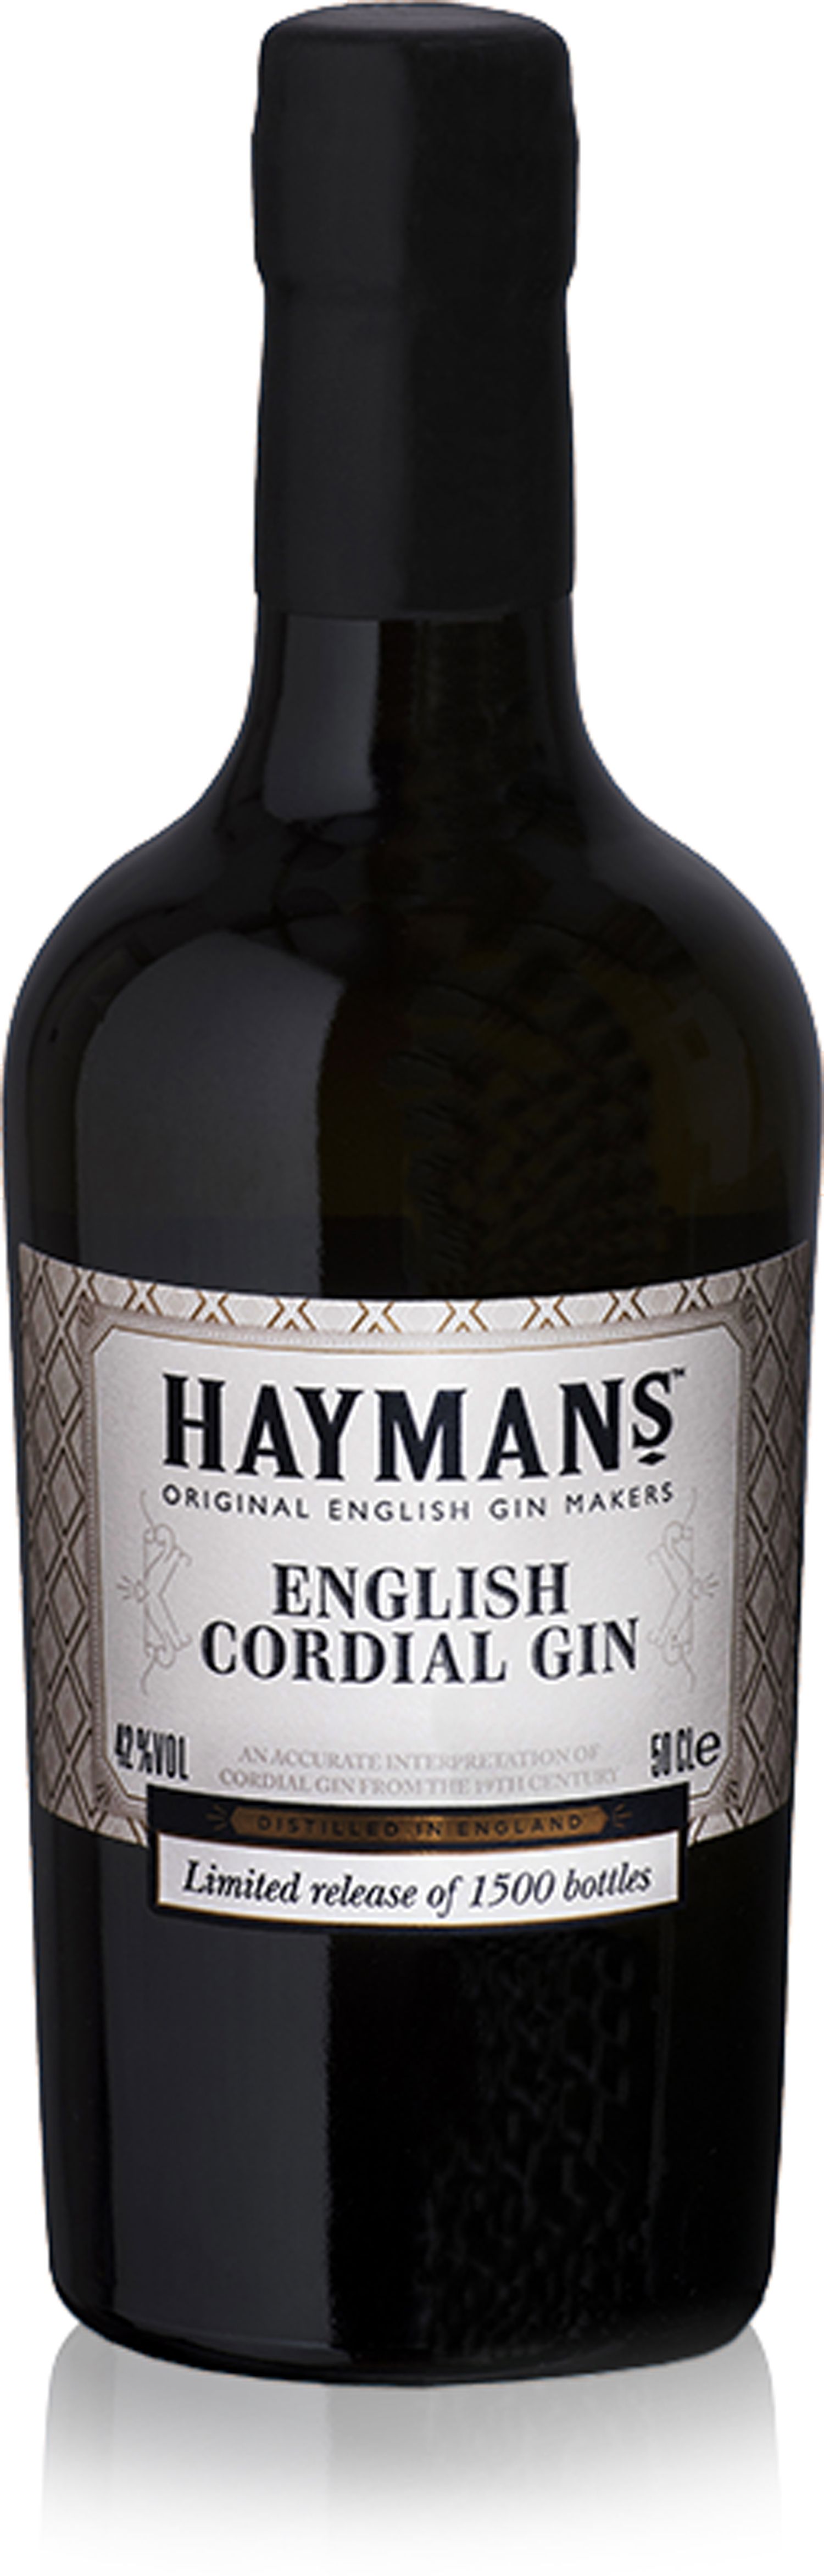 Haymans Cordial Gin English 50cl